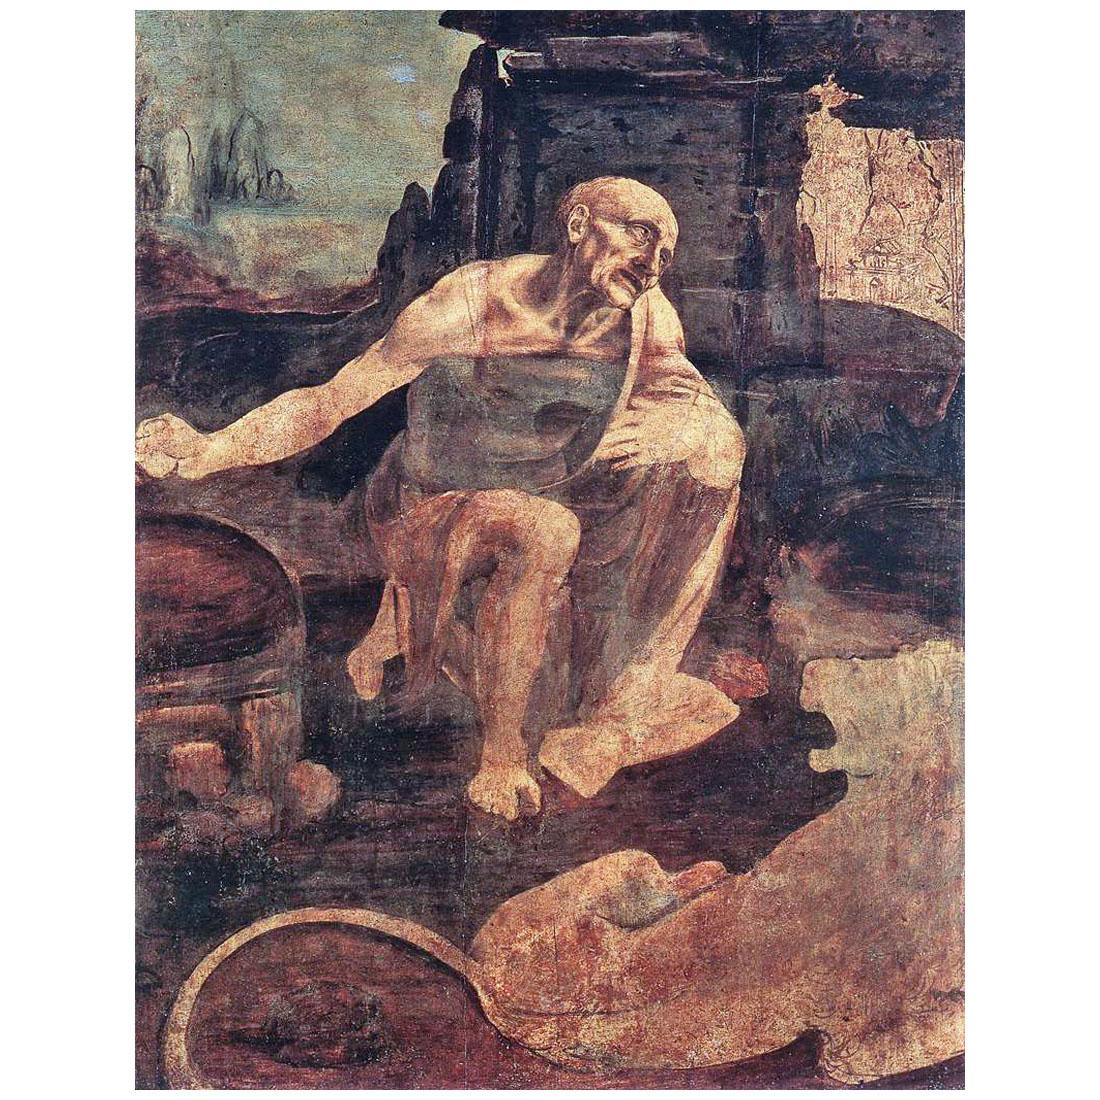 Leonardo da Vinci. San Girolamo. 1480-1482. Pincoteca Vaticana